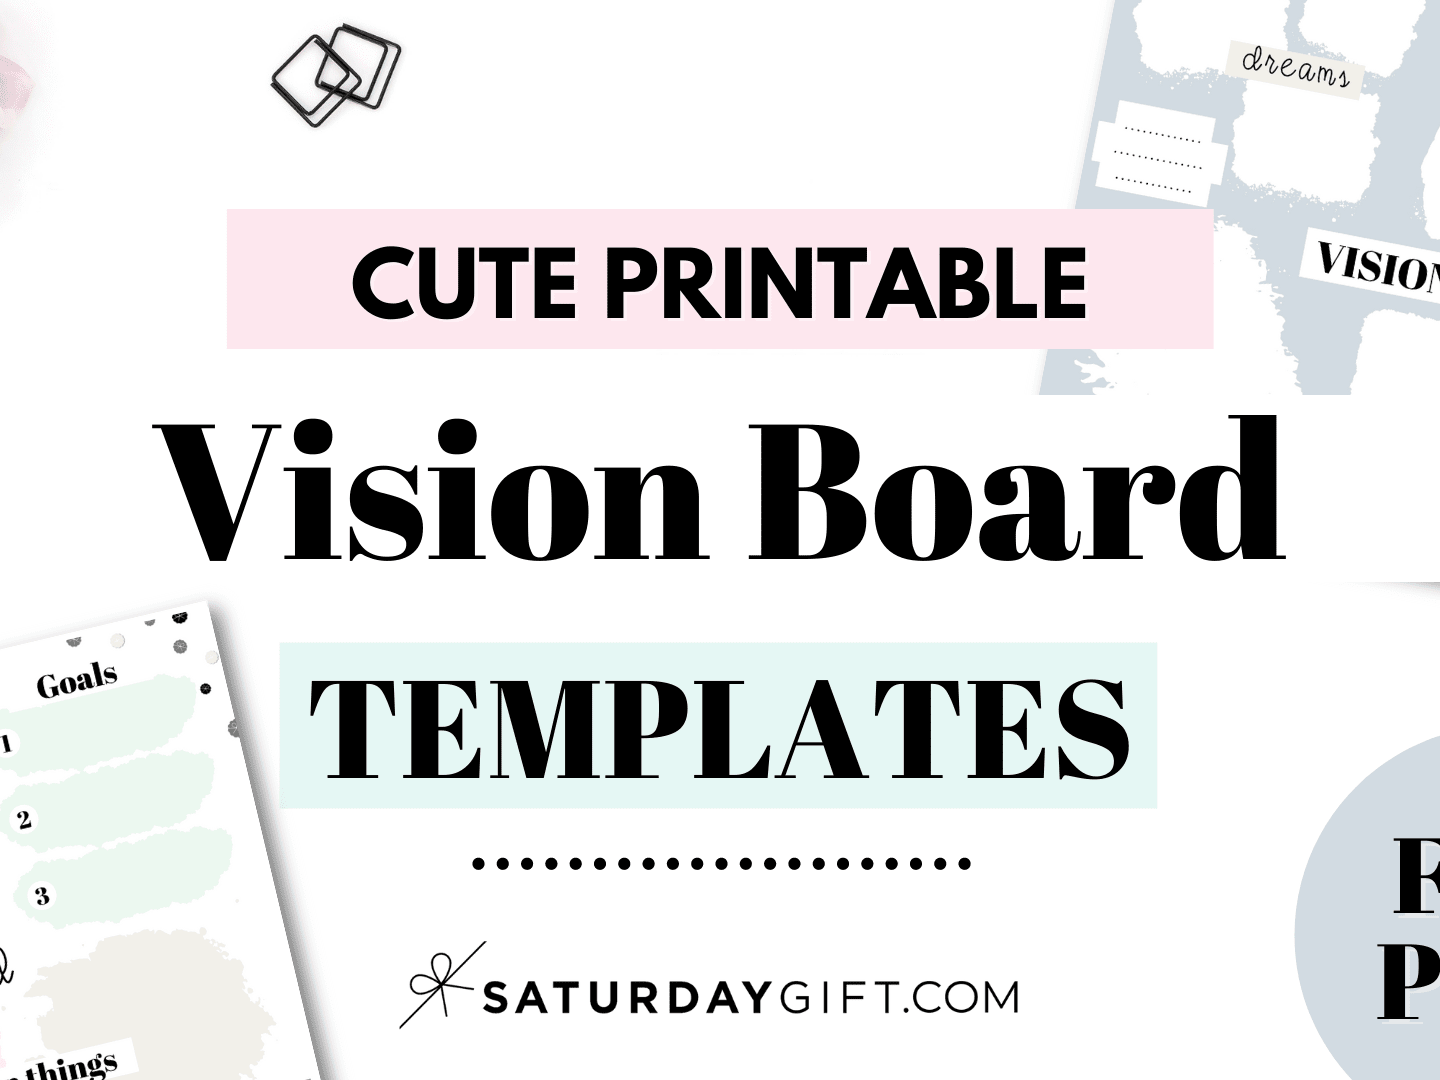 Vision Board Template - 27 Cute (&Free) Dream Board Printables